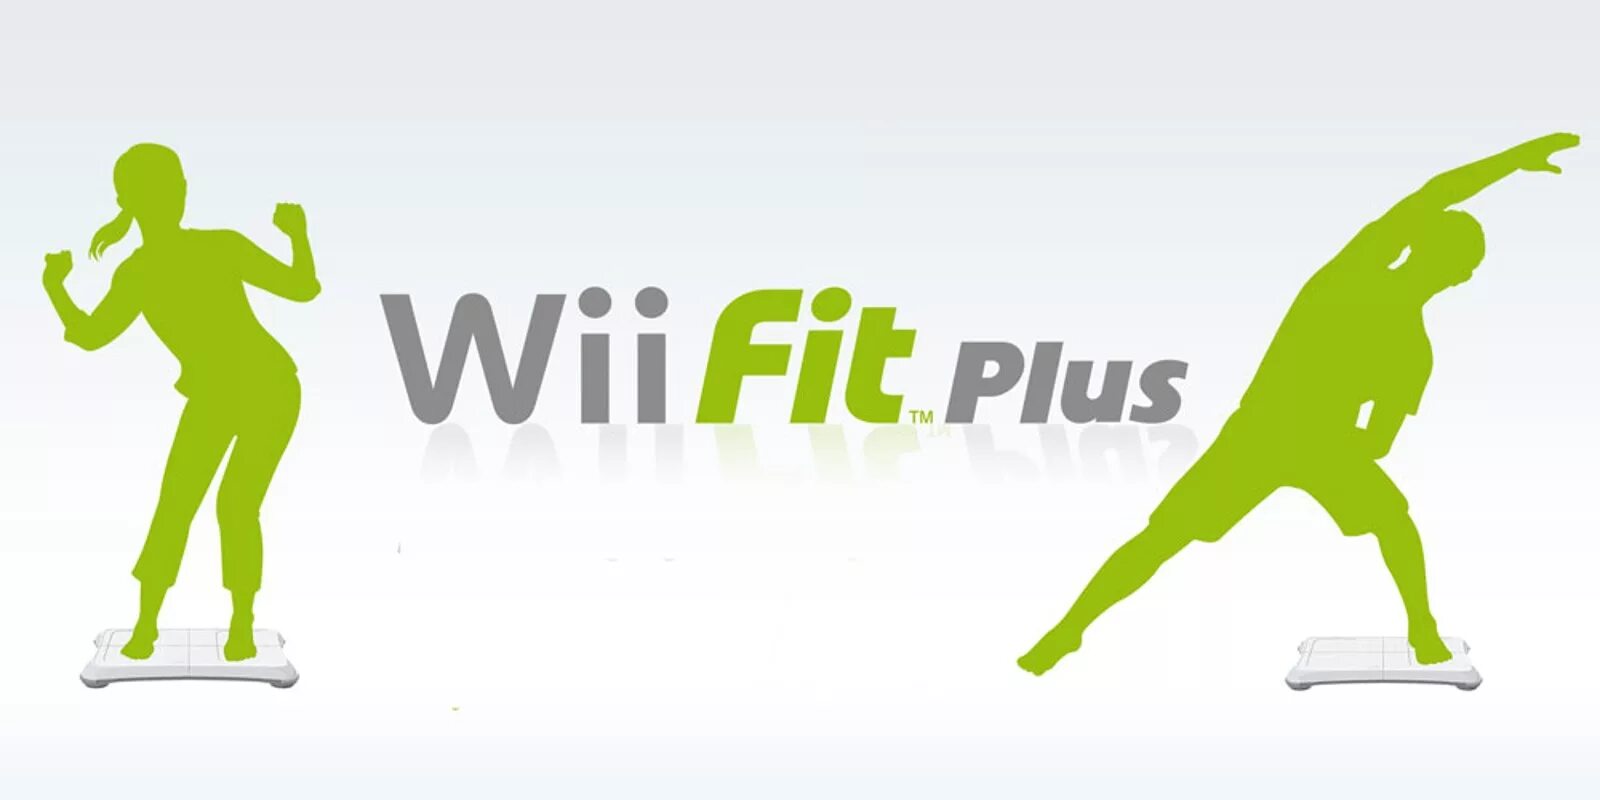 Nintendo Wii Fit. Wii Fit Plus. Wii Fit Plus игры. Игра Wii Fit Plus для Nintendo Wii.